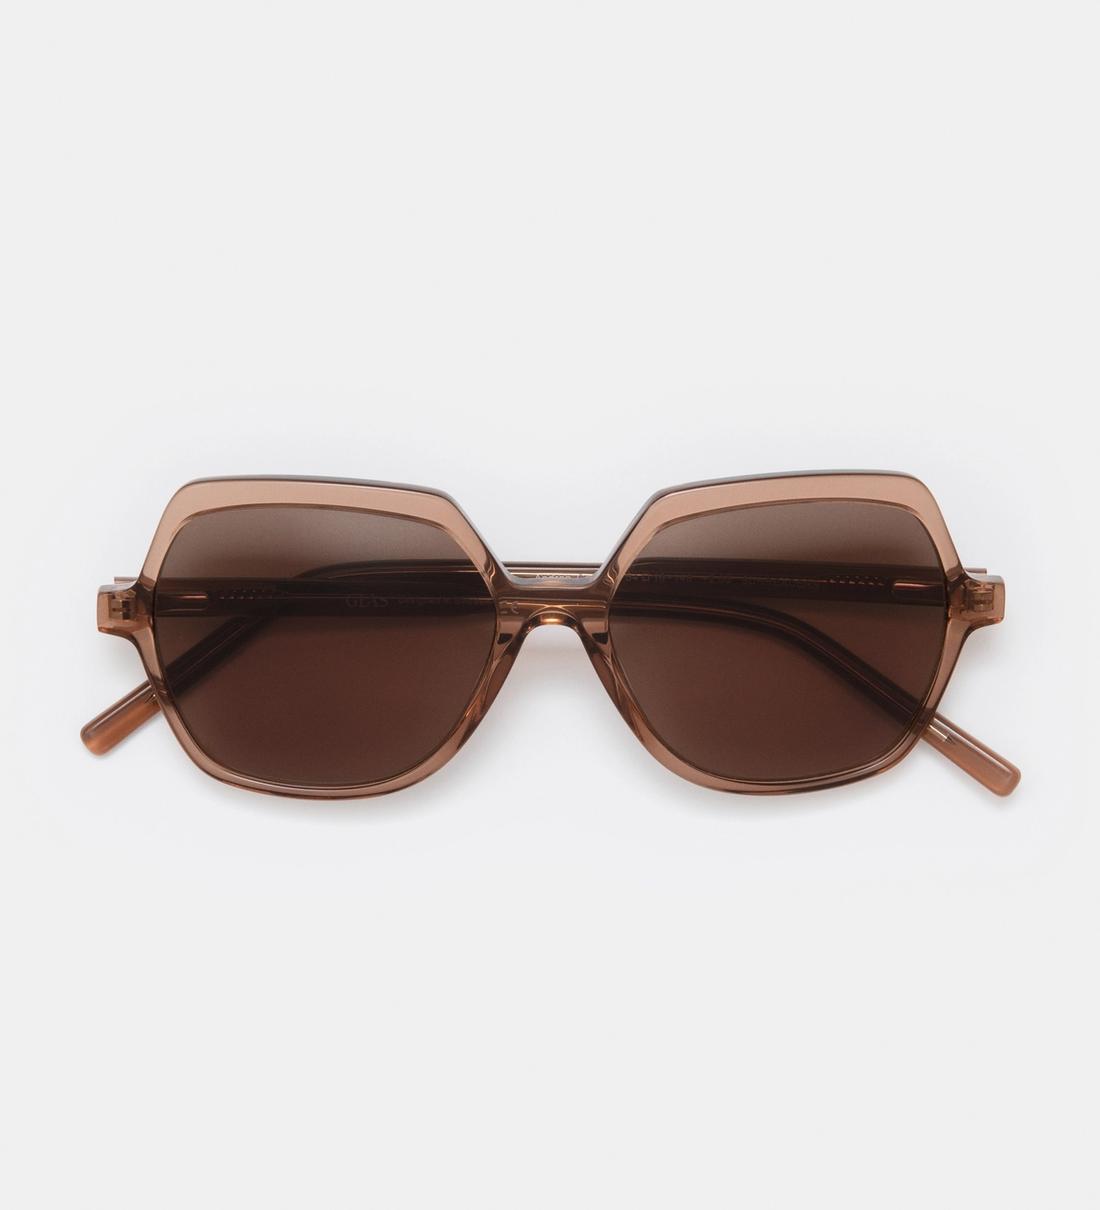 Andrea Cognac Progressive Sunglasses